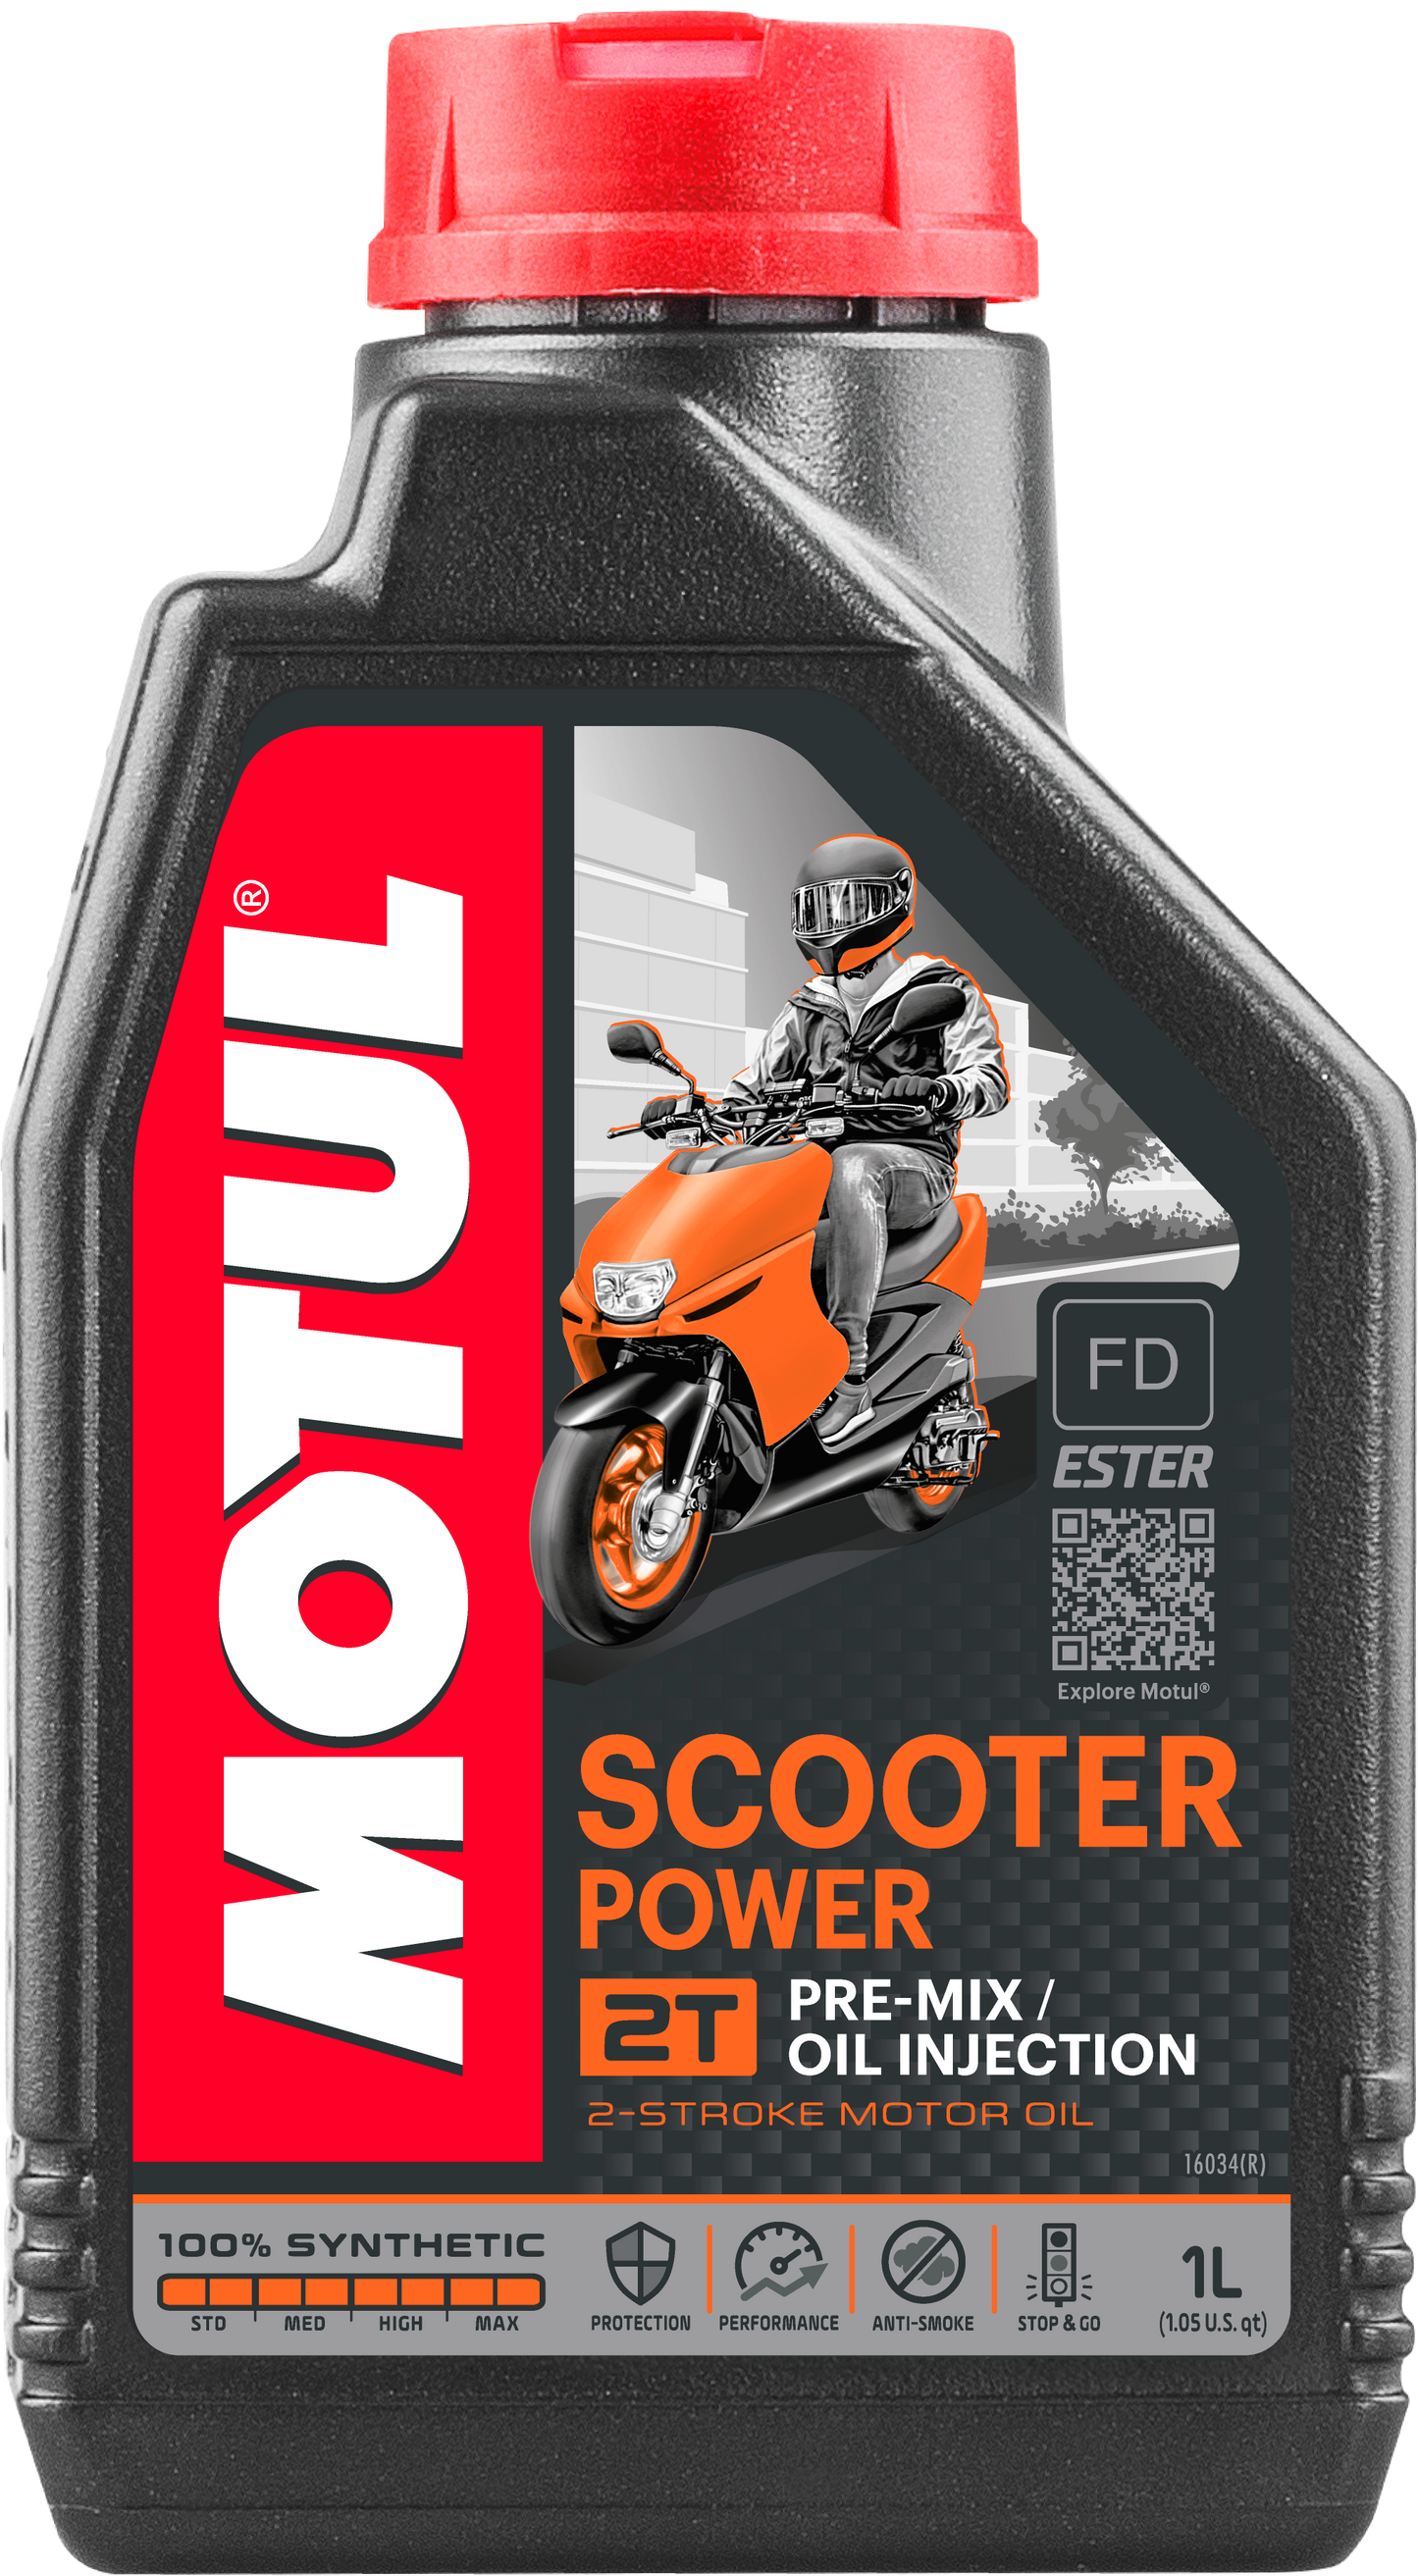 Motul Scooter Power 2T, 1 liter